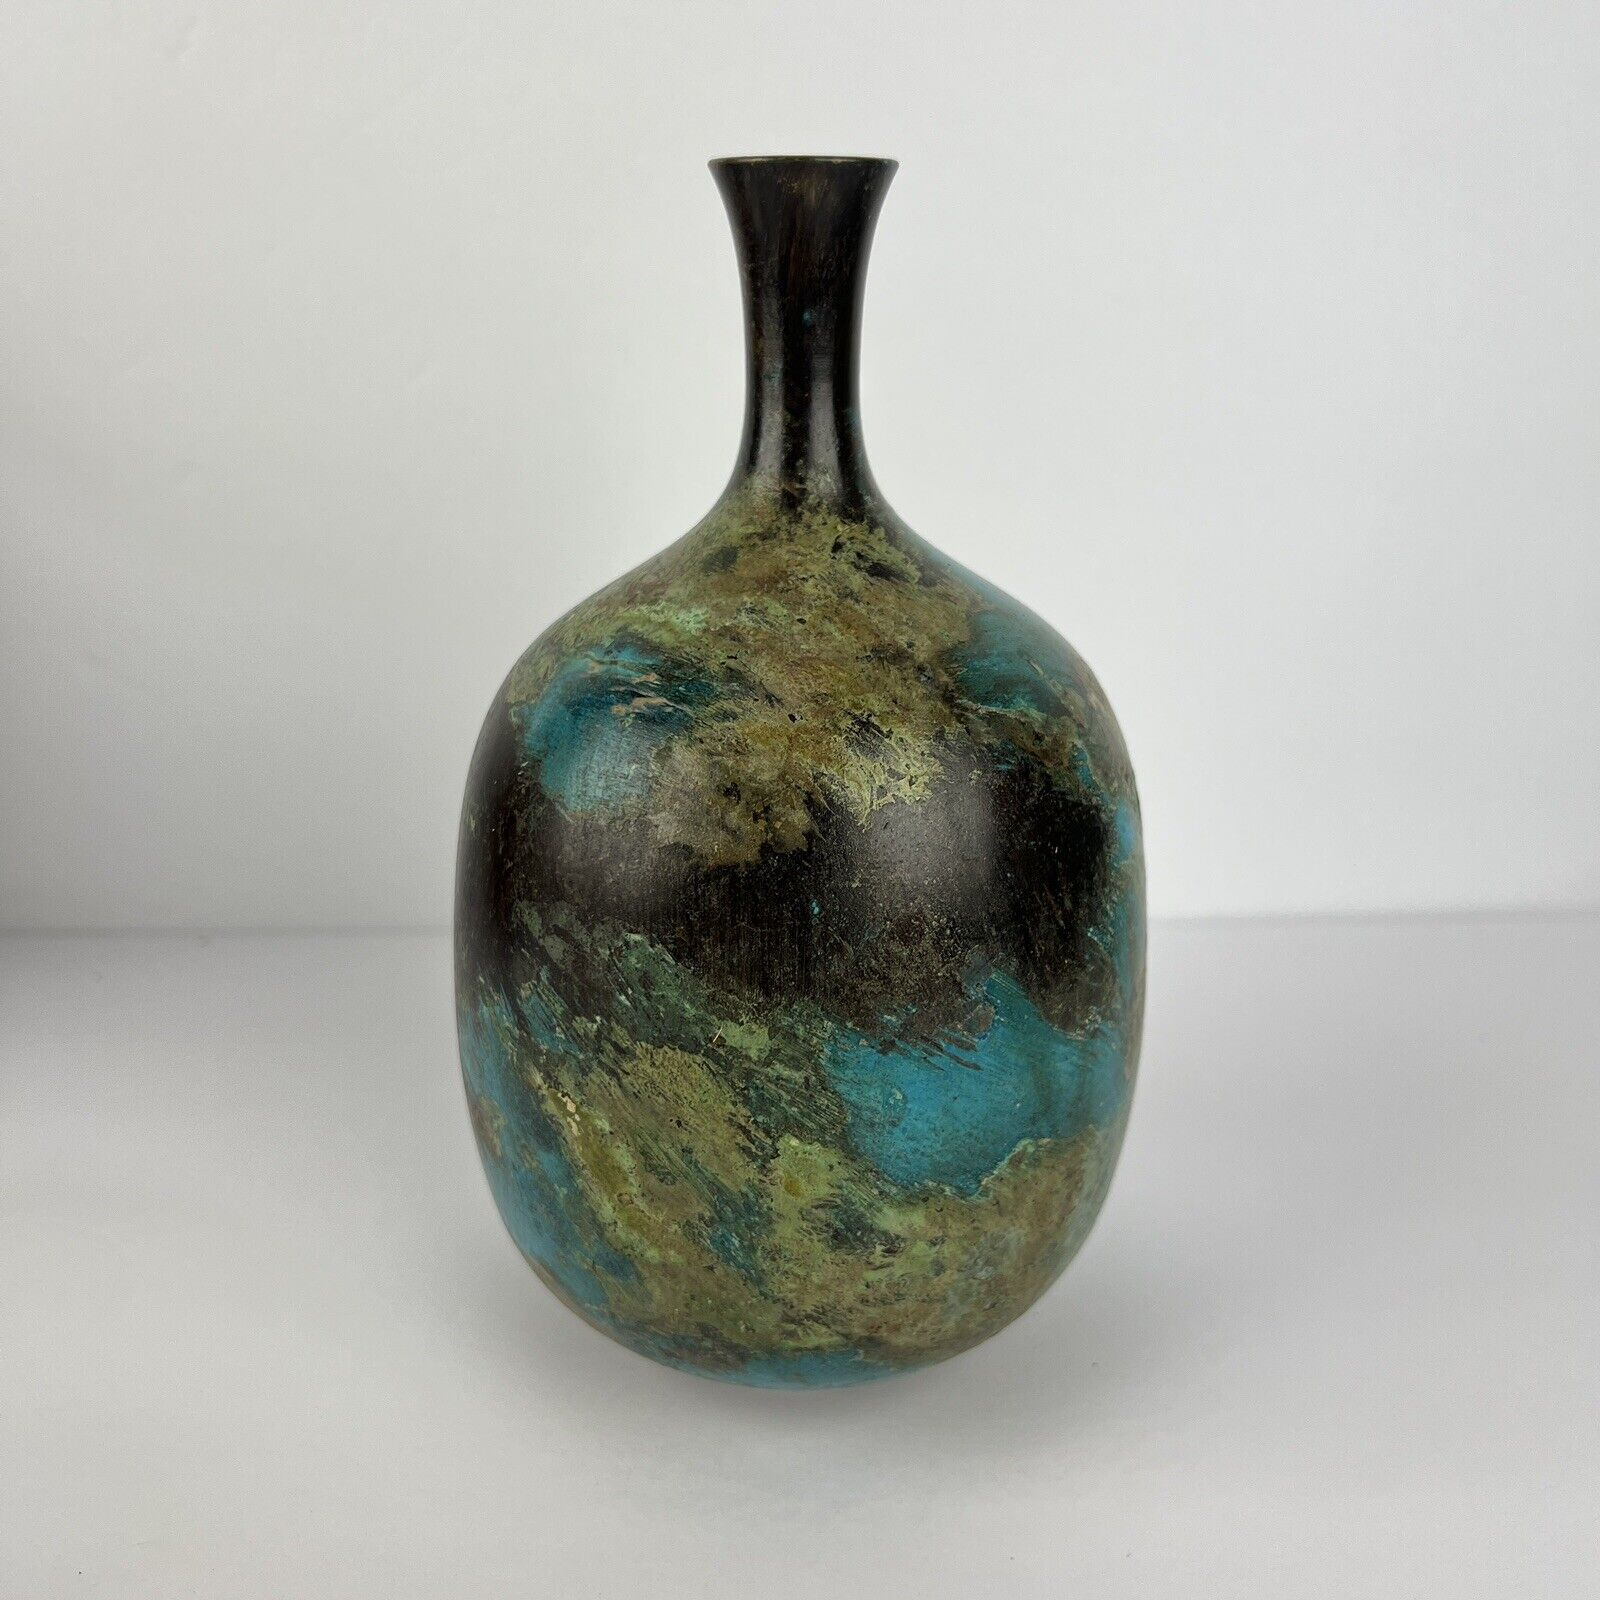 Japanese Bronze Vase Patinated Verdigris Blue Green